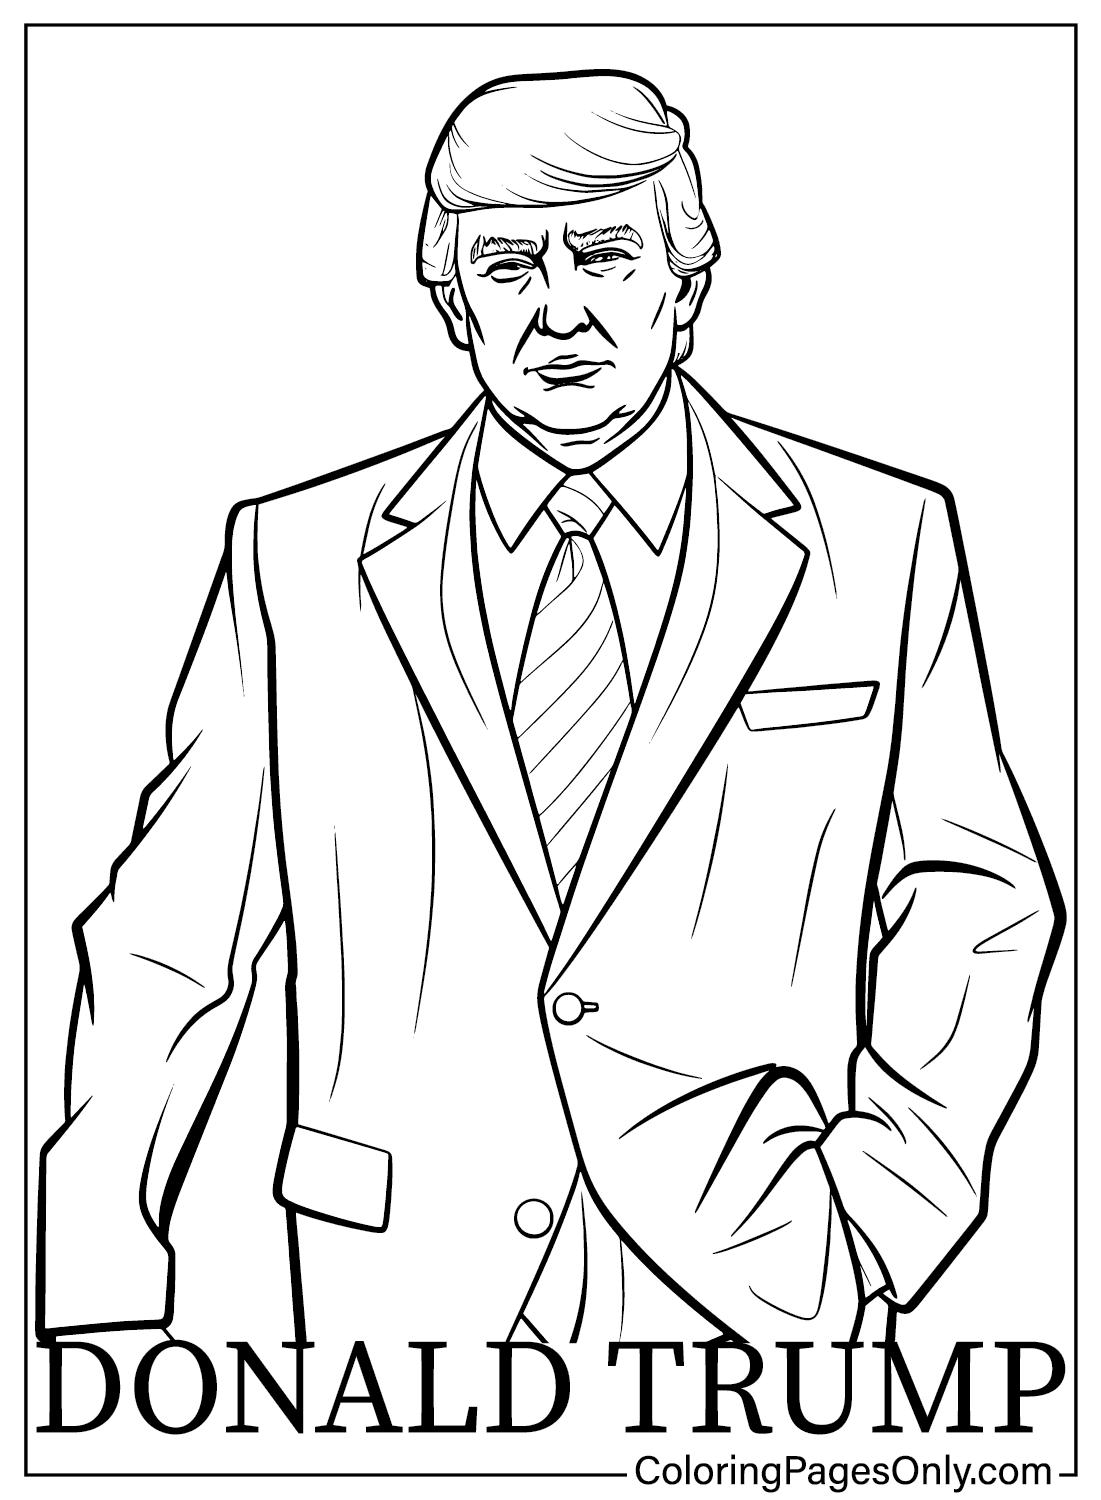 Donald Trump Página para colorear imprimir gratis de Donald Trump